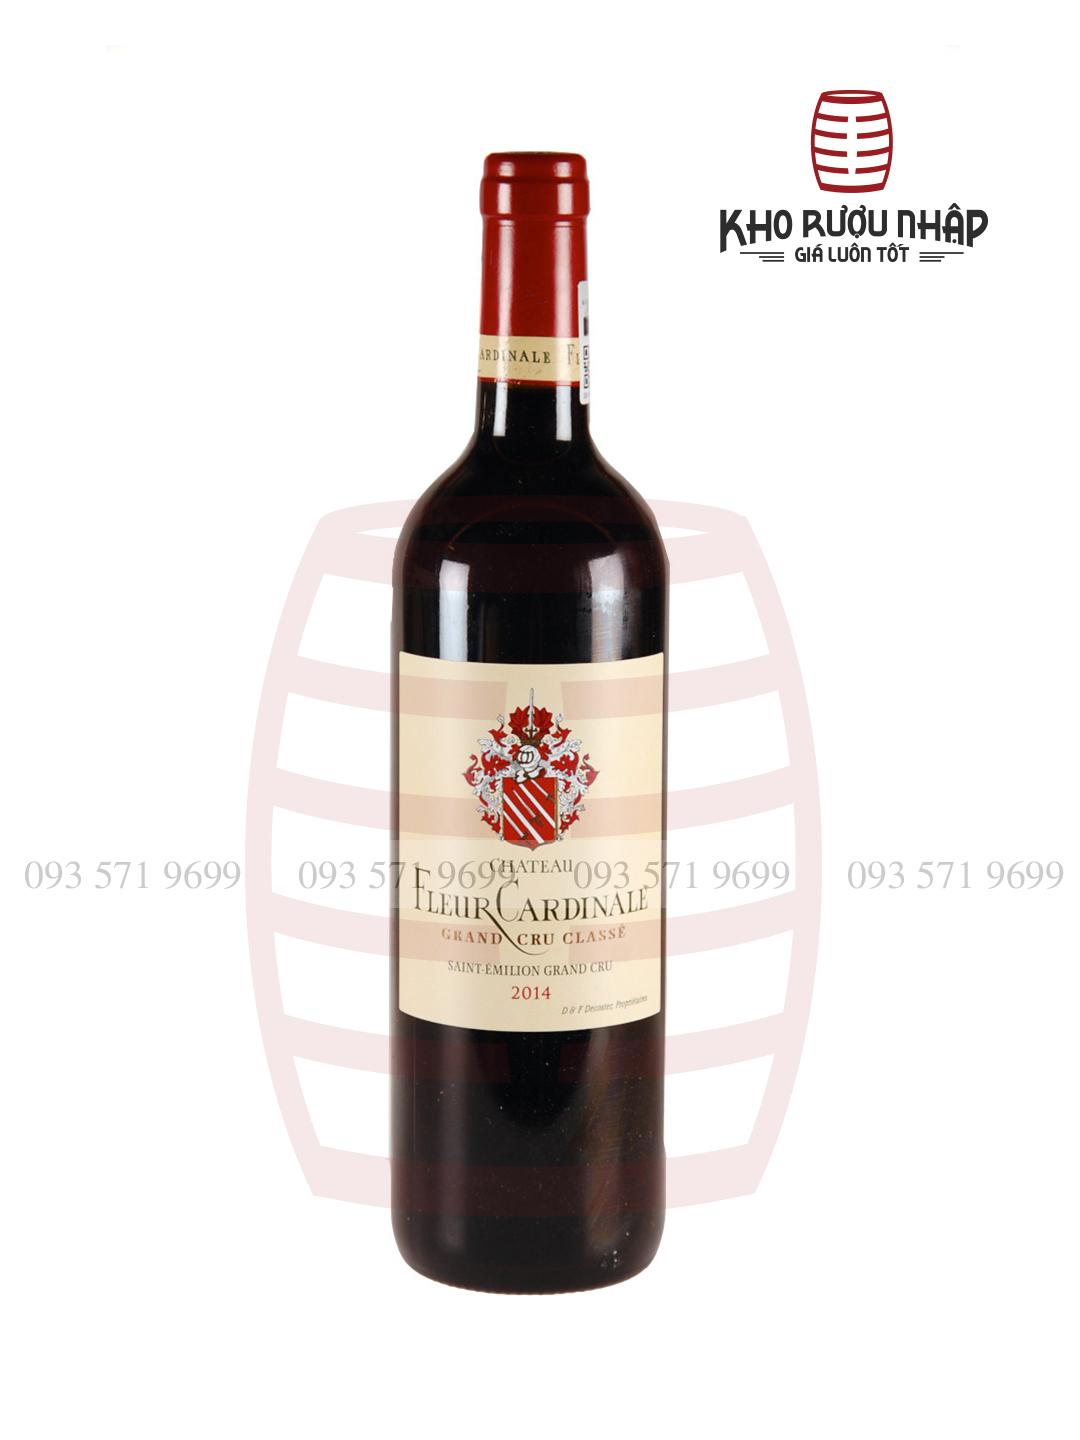 Rượu vang Pháp Chateau Fleur Cardinale 2015 Grand Cru Classe – CIW410